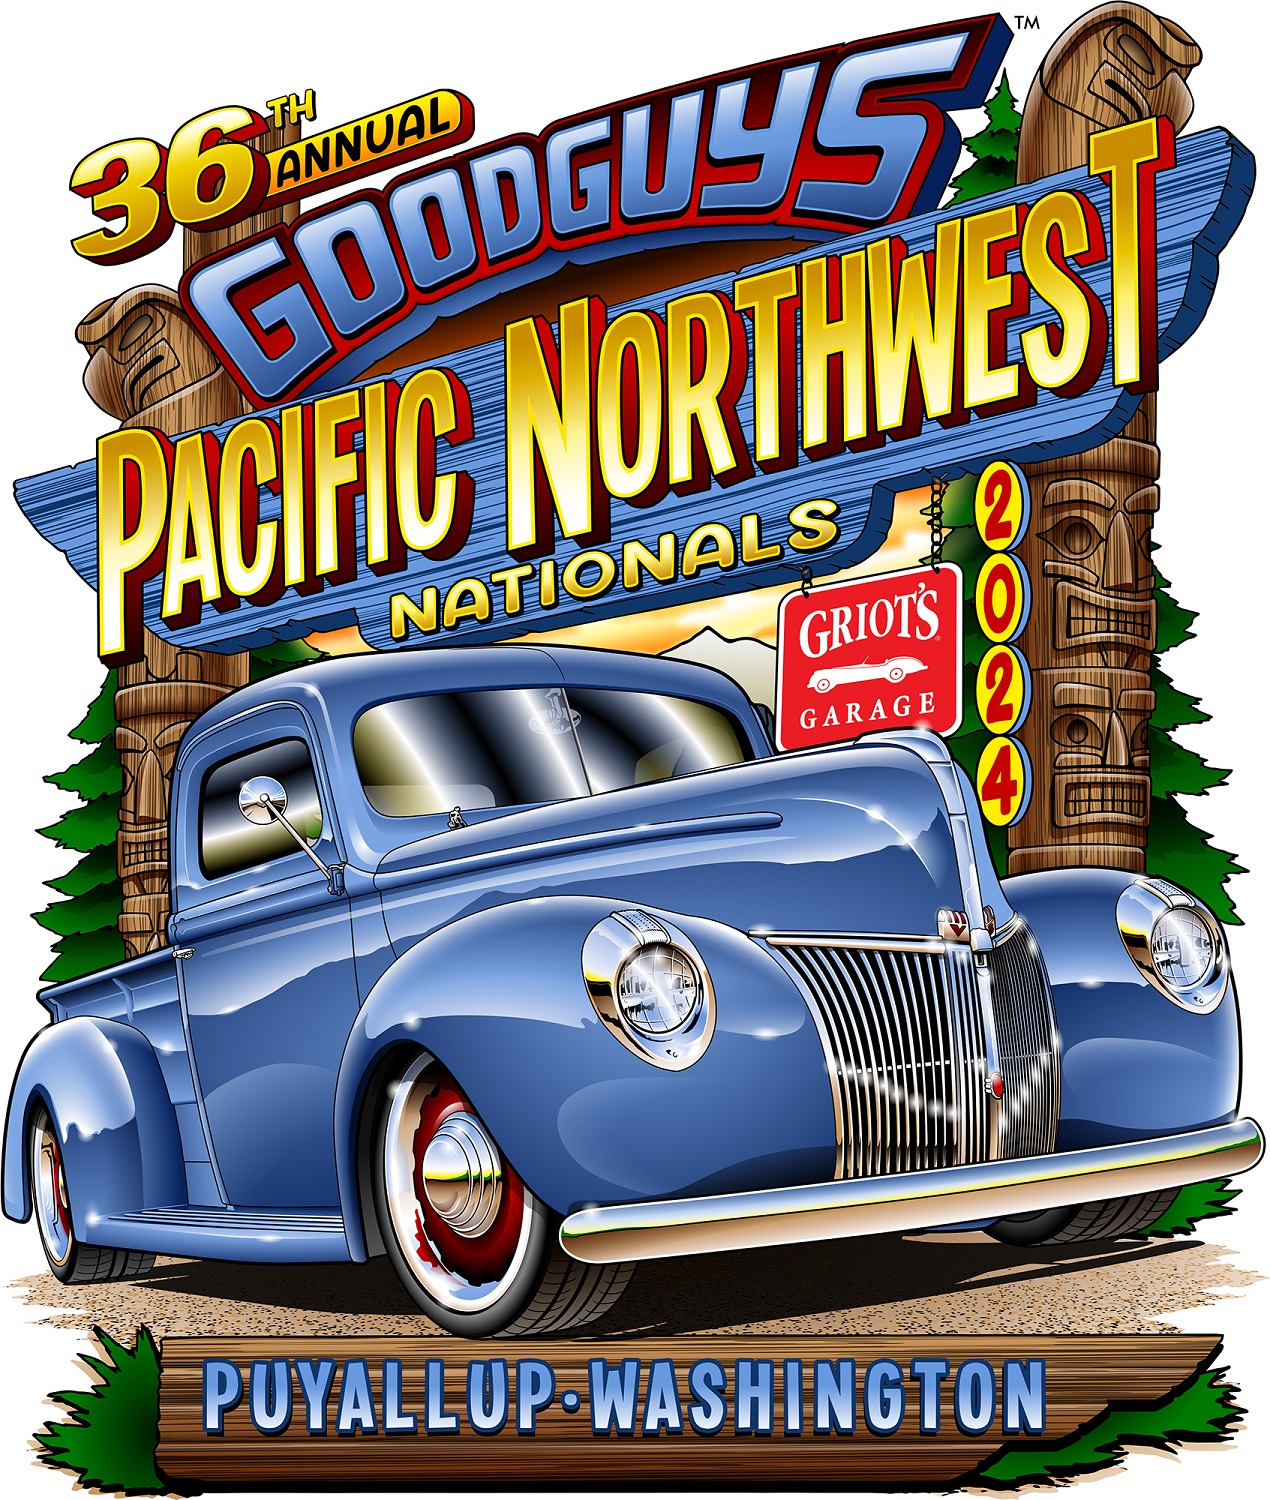 Pacific Northwest Nationals